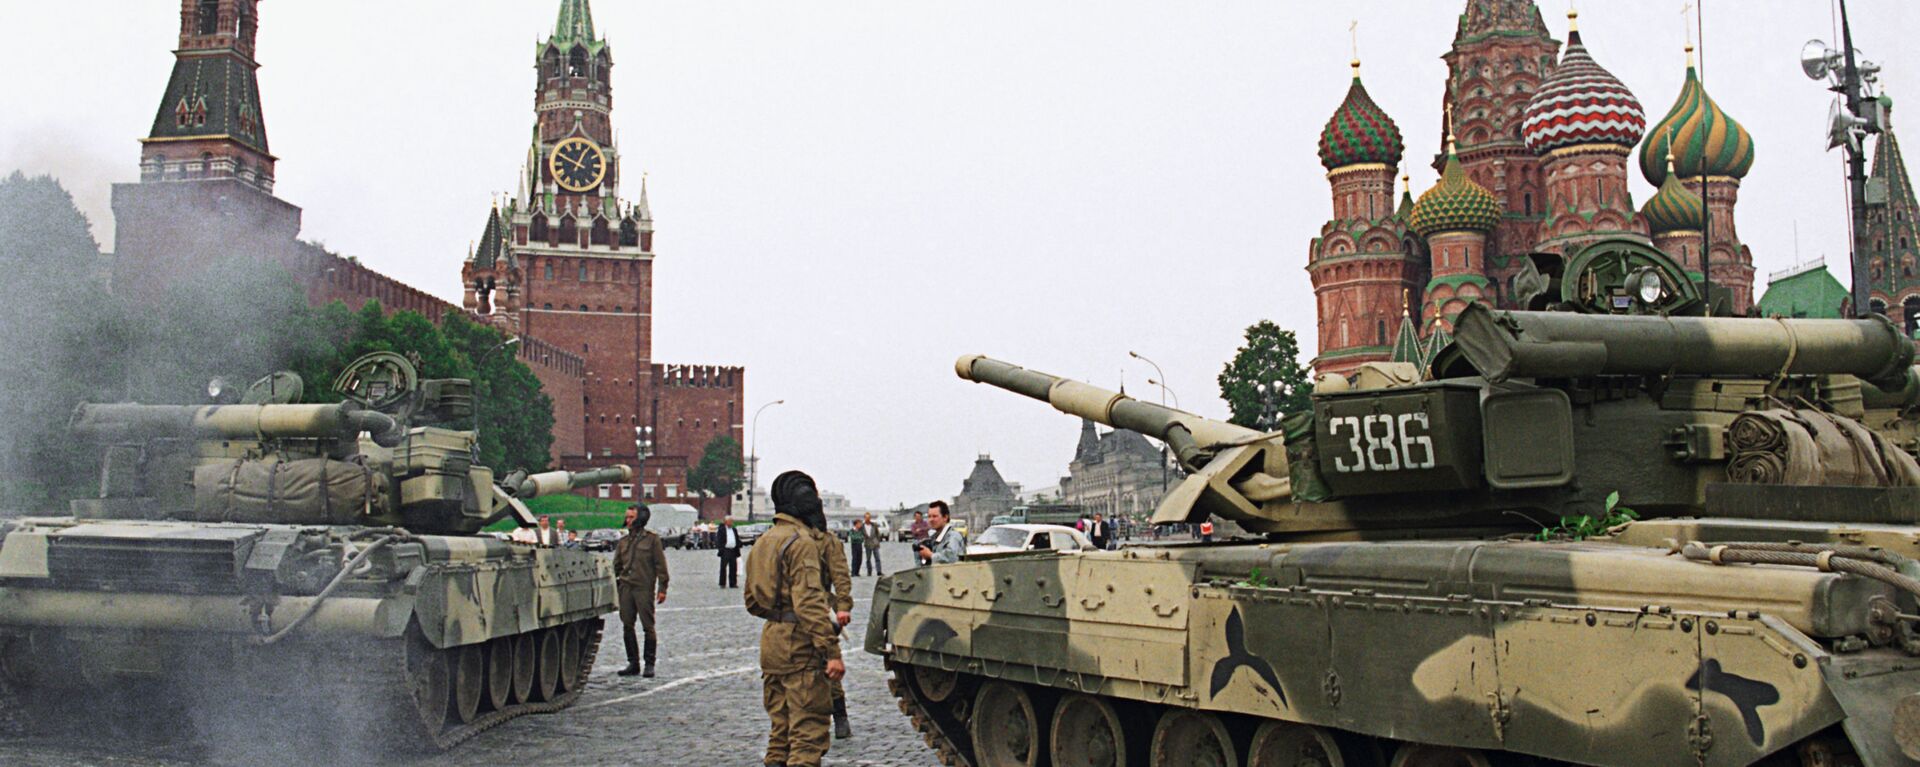 Tanques en la Plaza Roja en agosto del 1991 - Sputnik Mundo, 1920, 22.01.2020